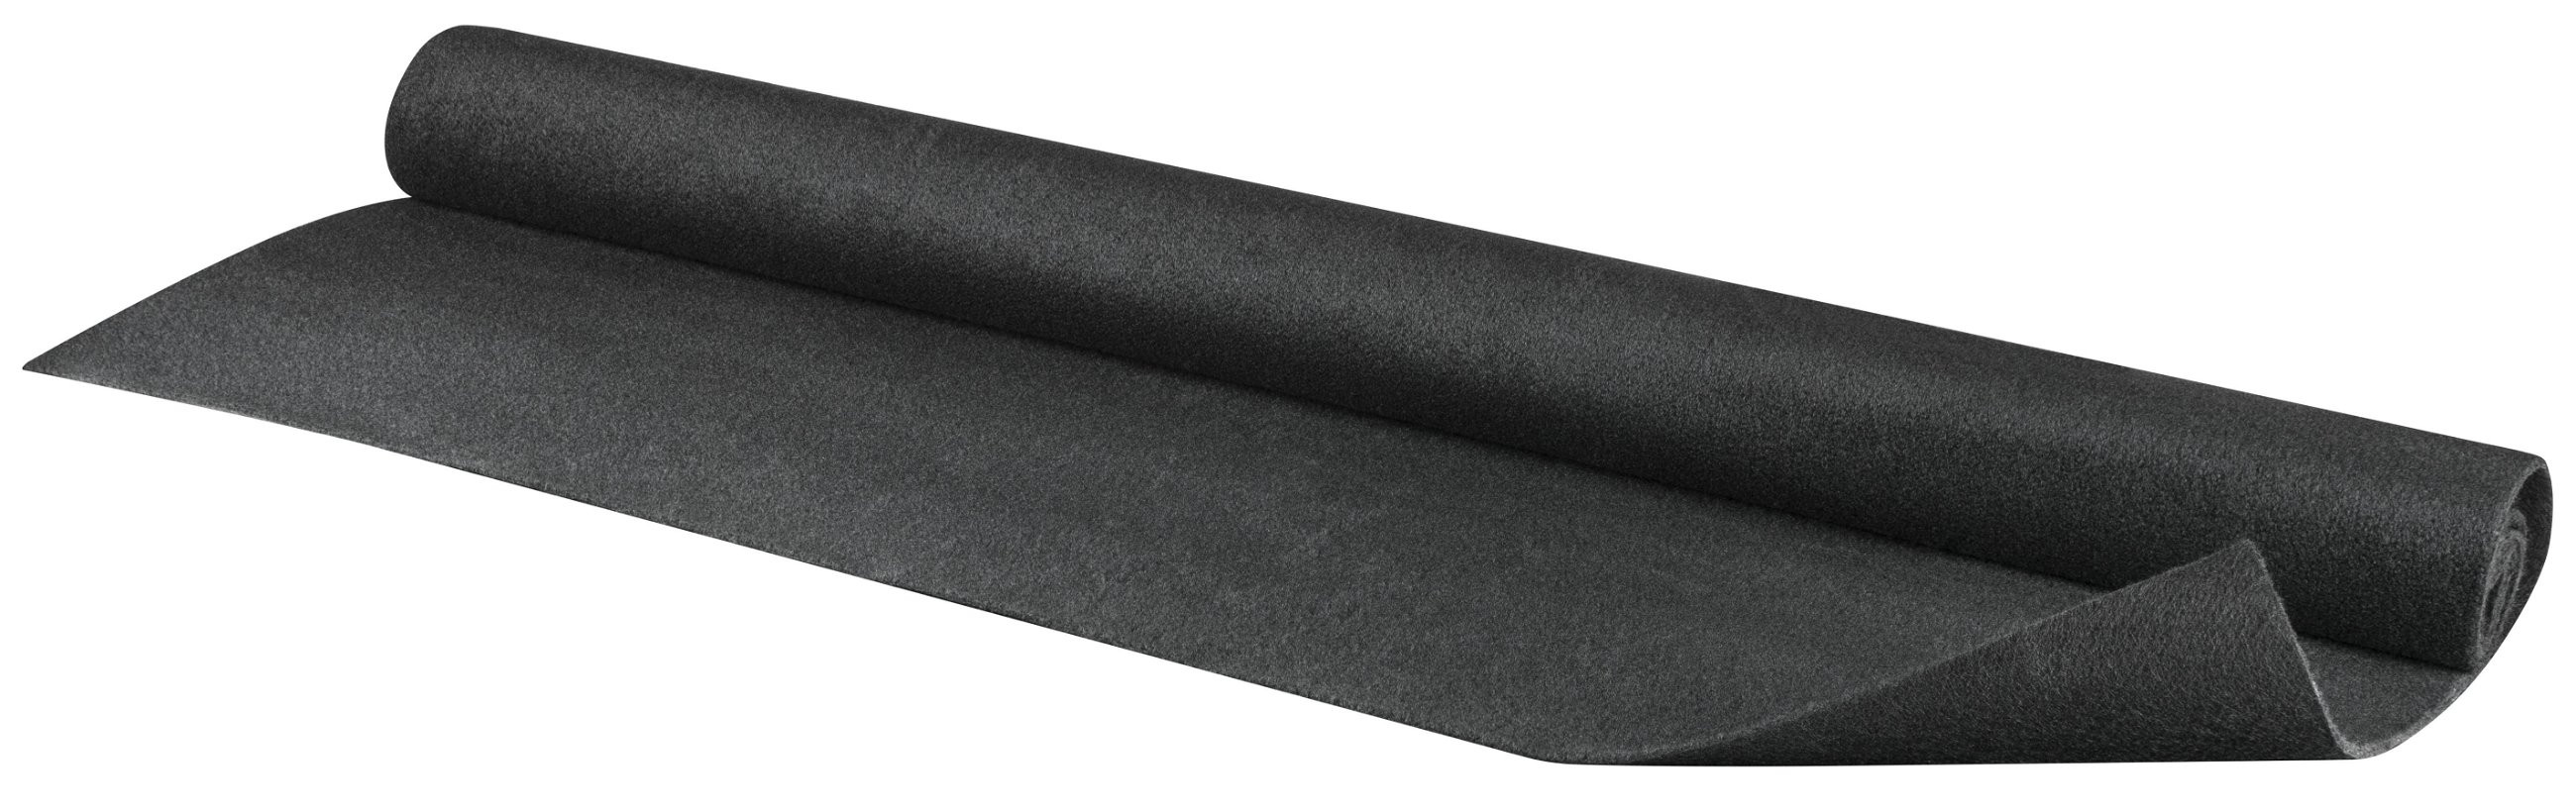 Car carpet Cutty 150x100 cm universal black